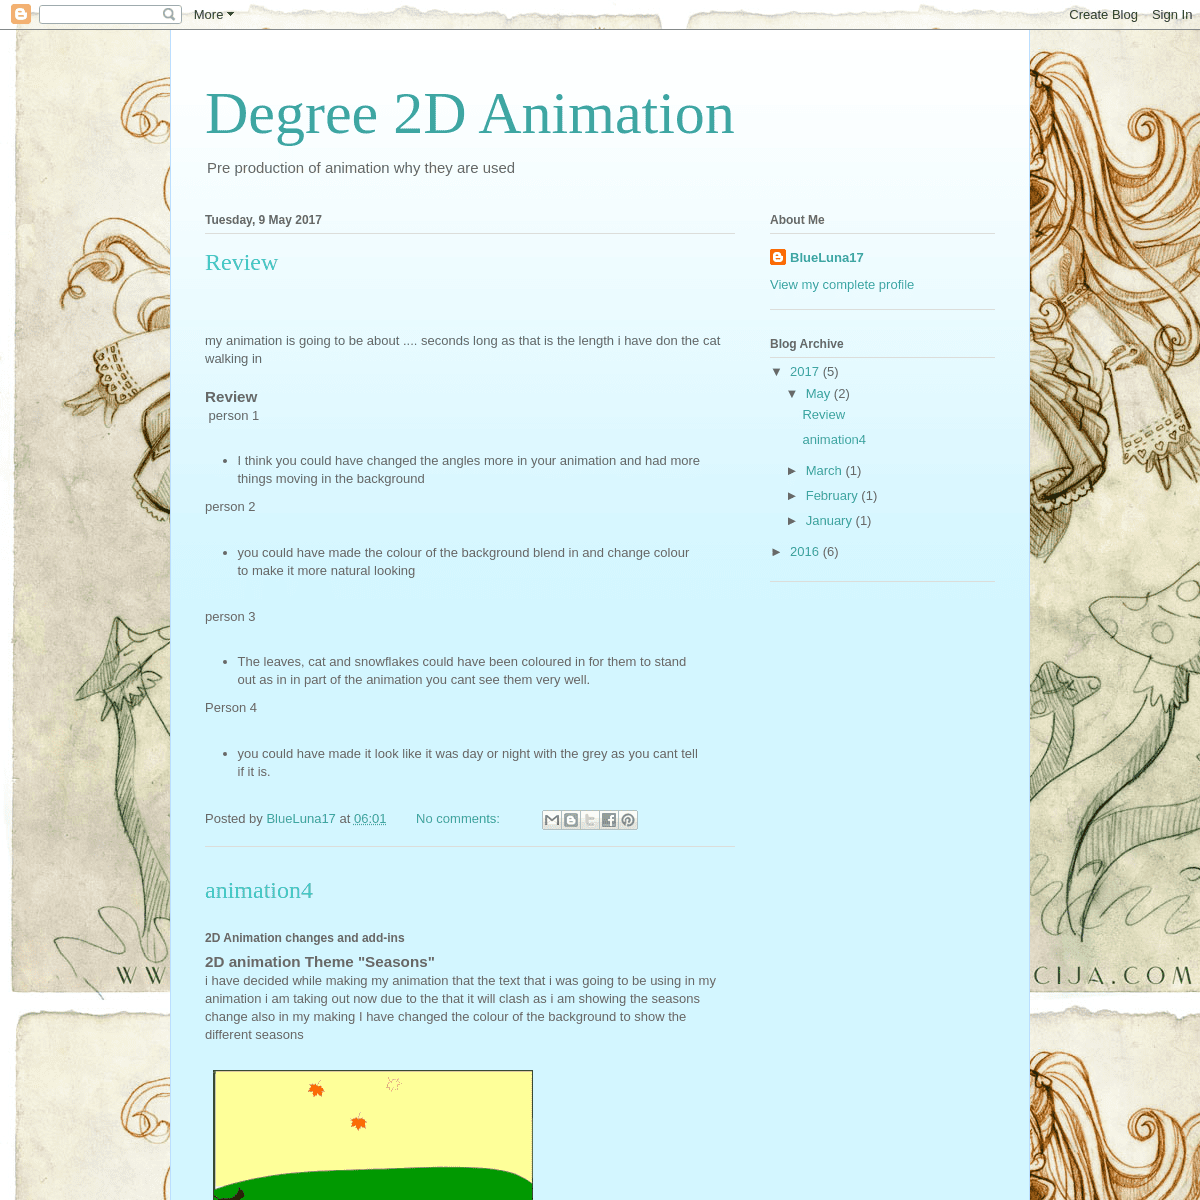 A complete backup of animationpreproduction20300233.blogspot.com